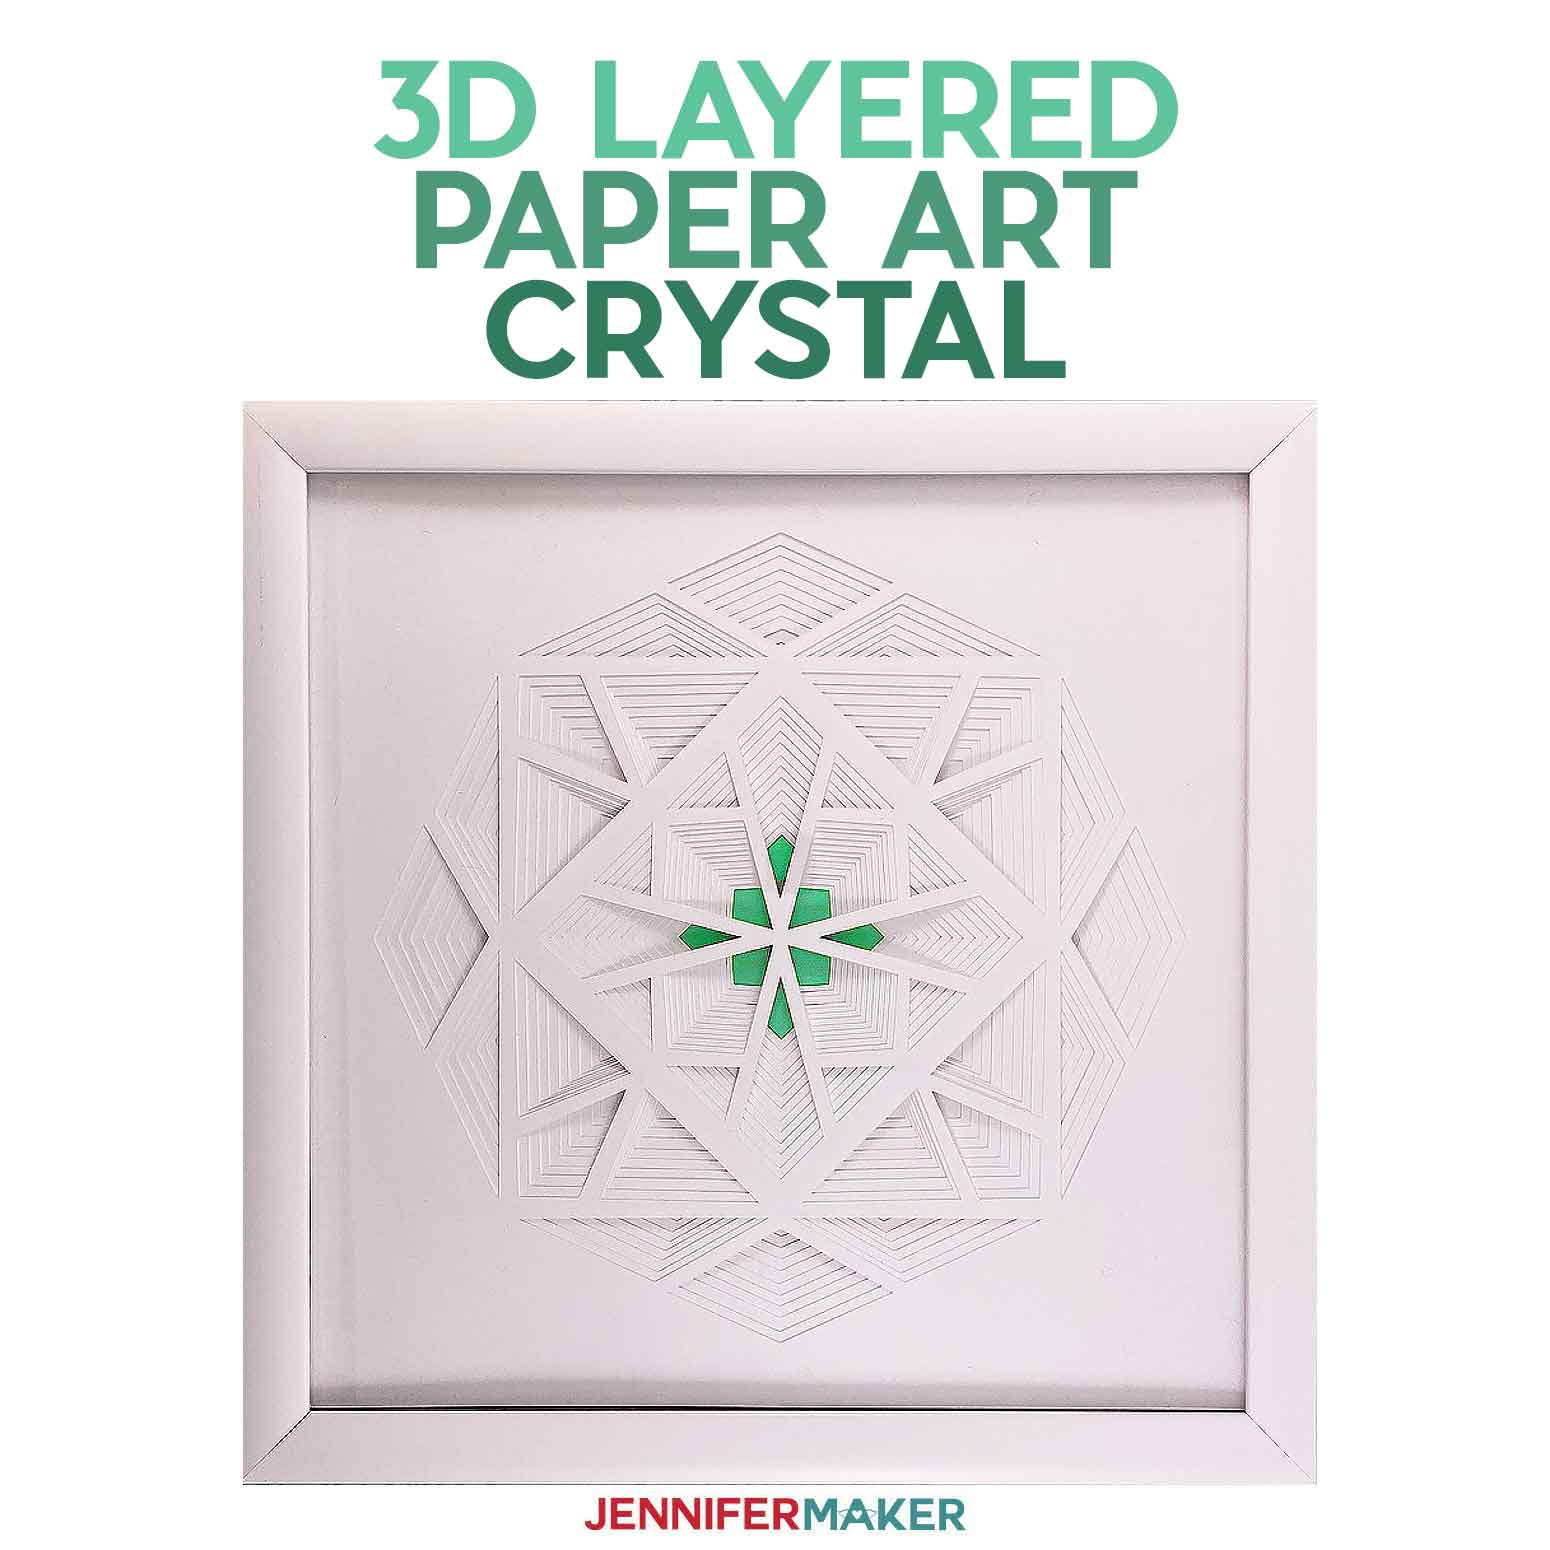 3D Layered Cut Art: The Crystal / Diamond (Series 2 of 4)